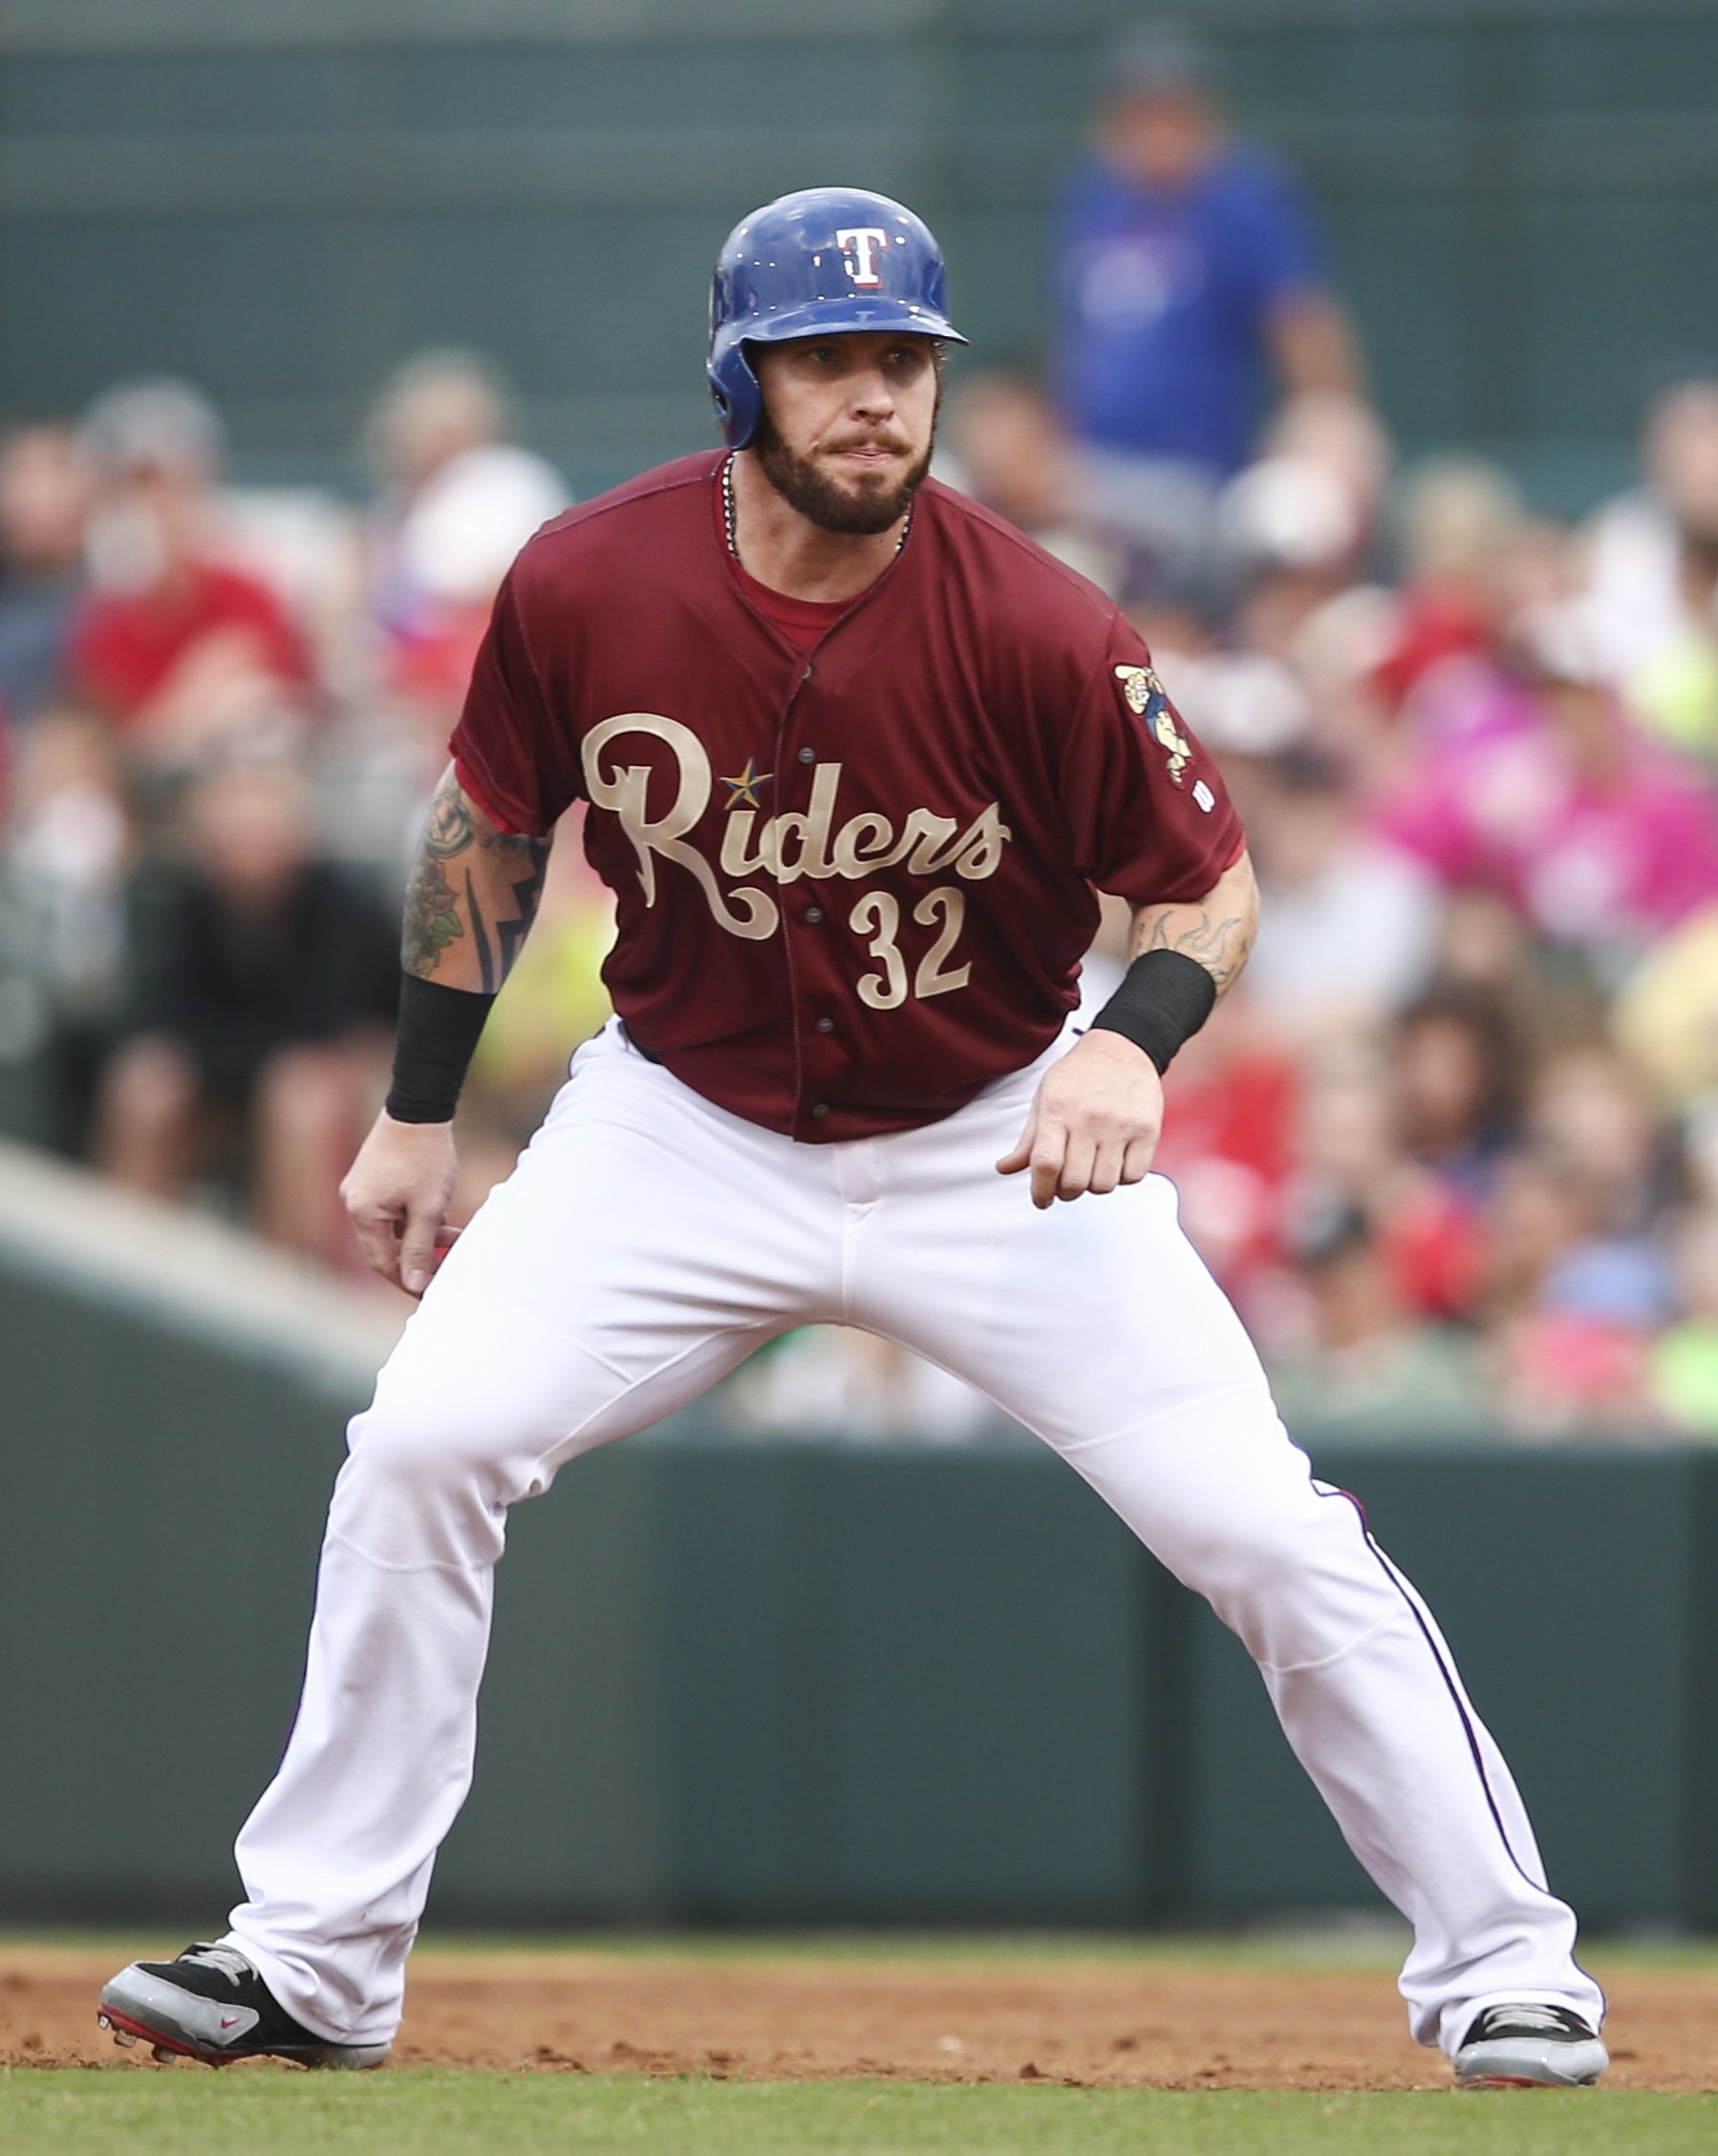  2015 Topps Update #US257 Josh Hamilton Rangers MLB